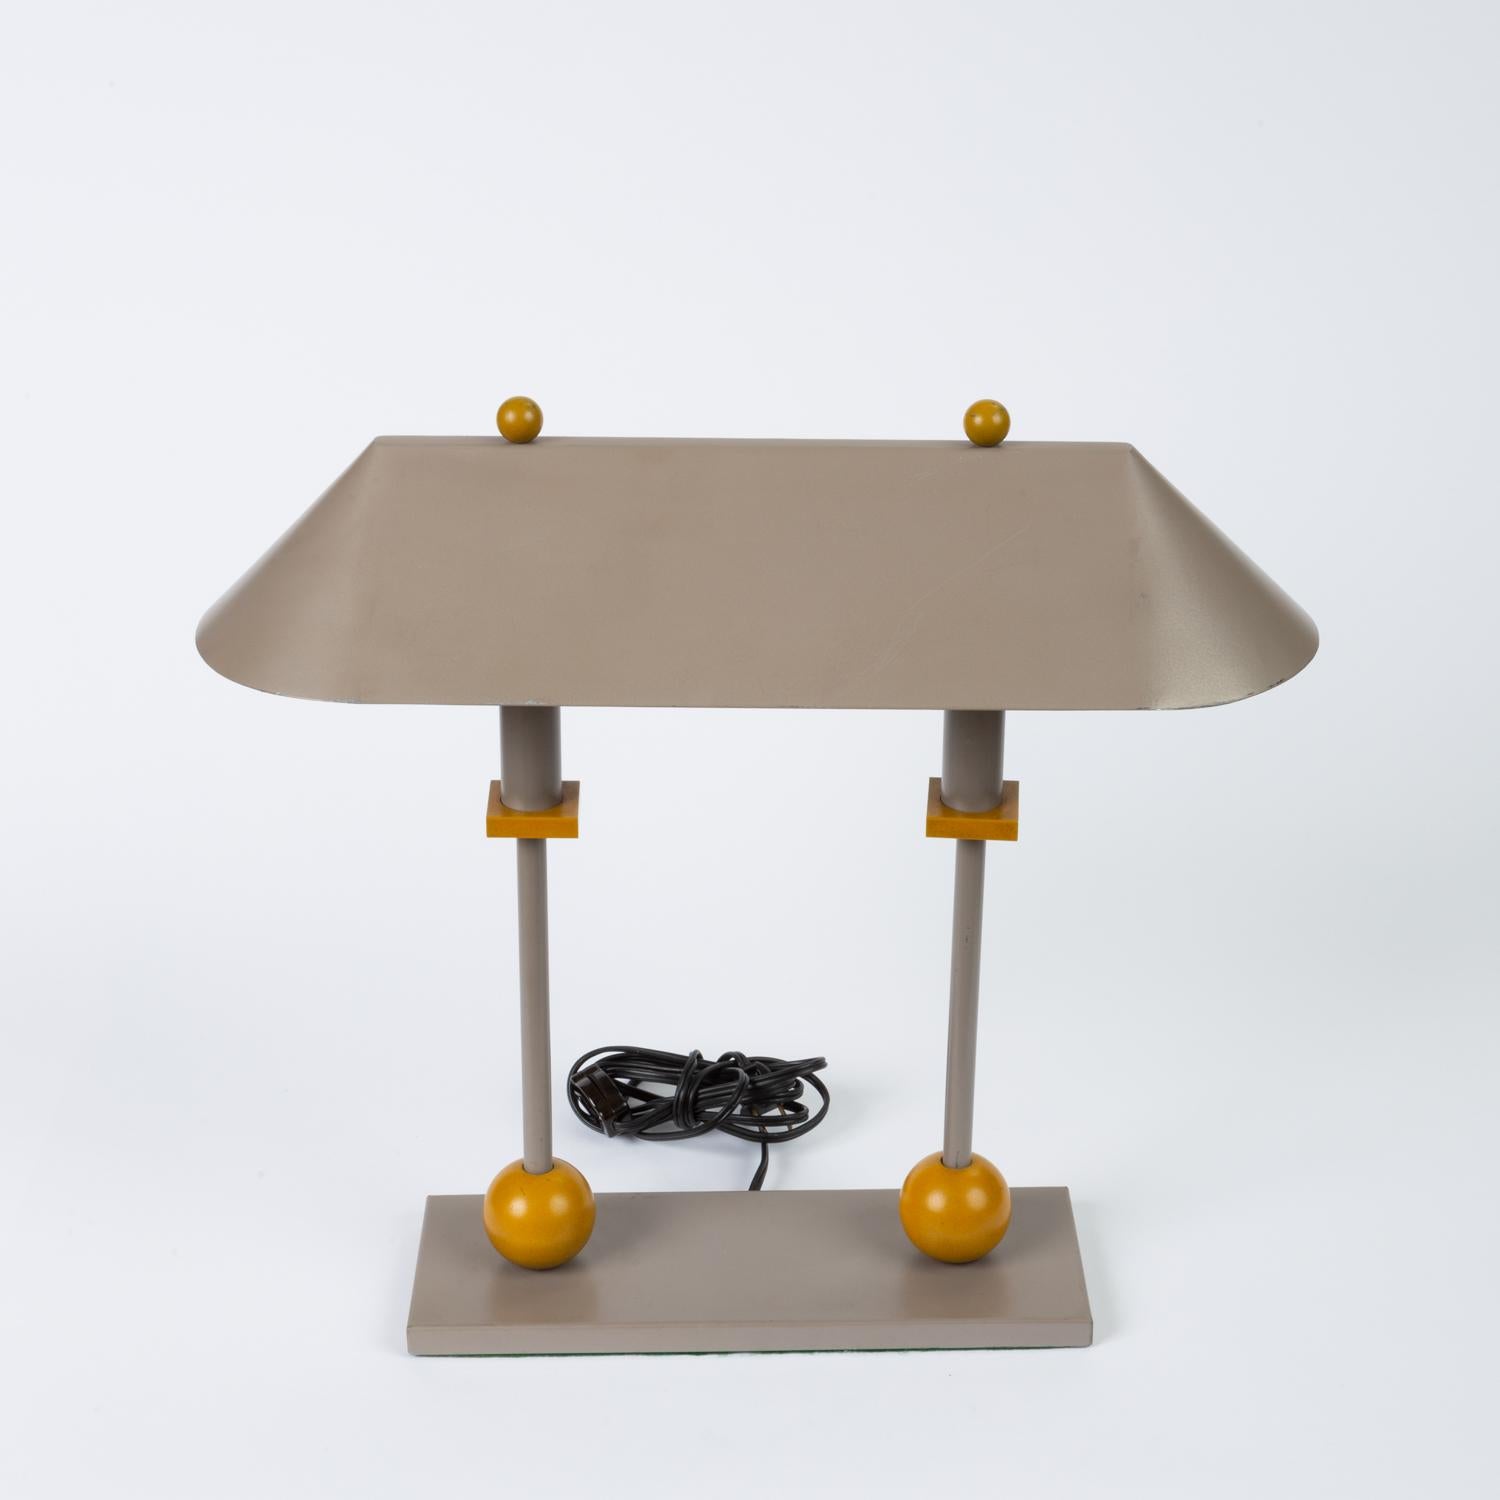 20th Century 1990s Postmodern Desk or Table Lamp by Robert Sonneman for George Kovacs